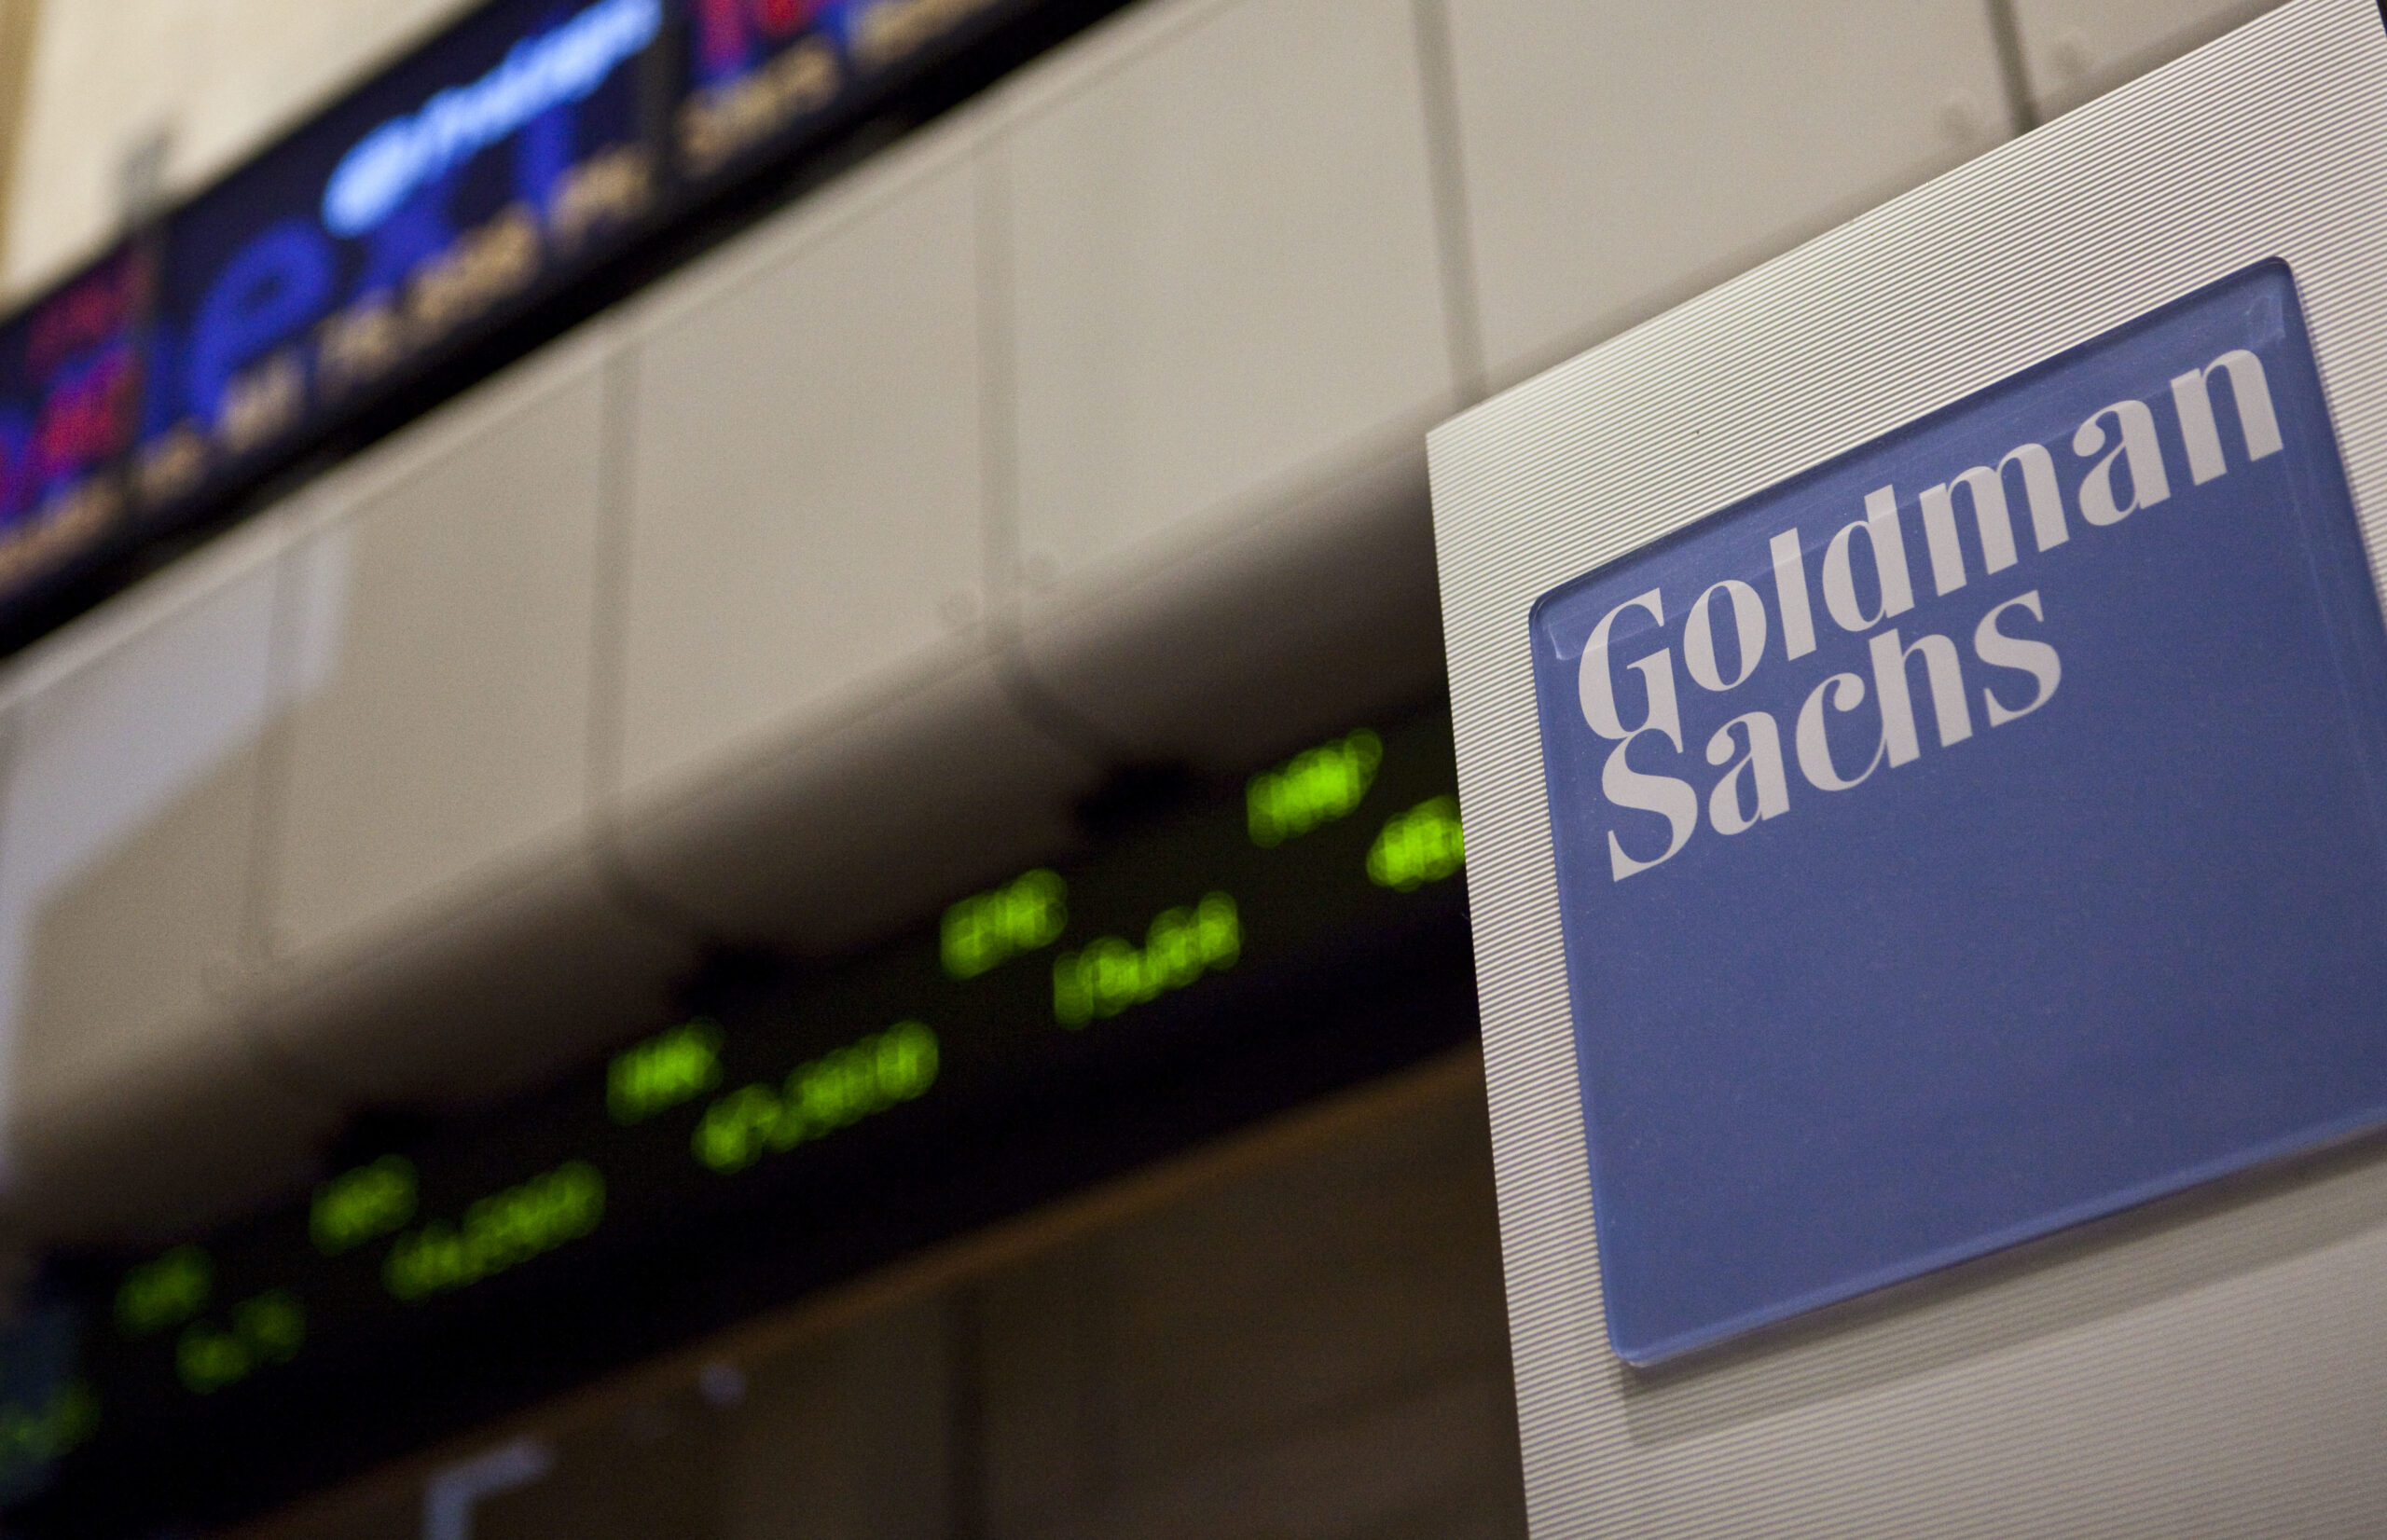 Goldman Sachs Distributes Pronoun Guides Amid Banking Crisis: Report